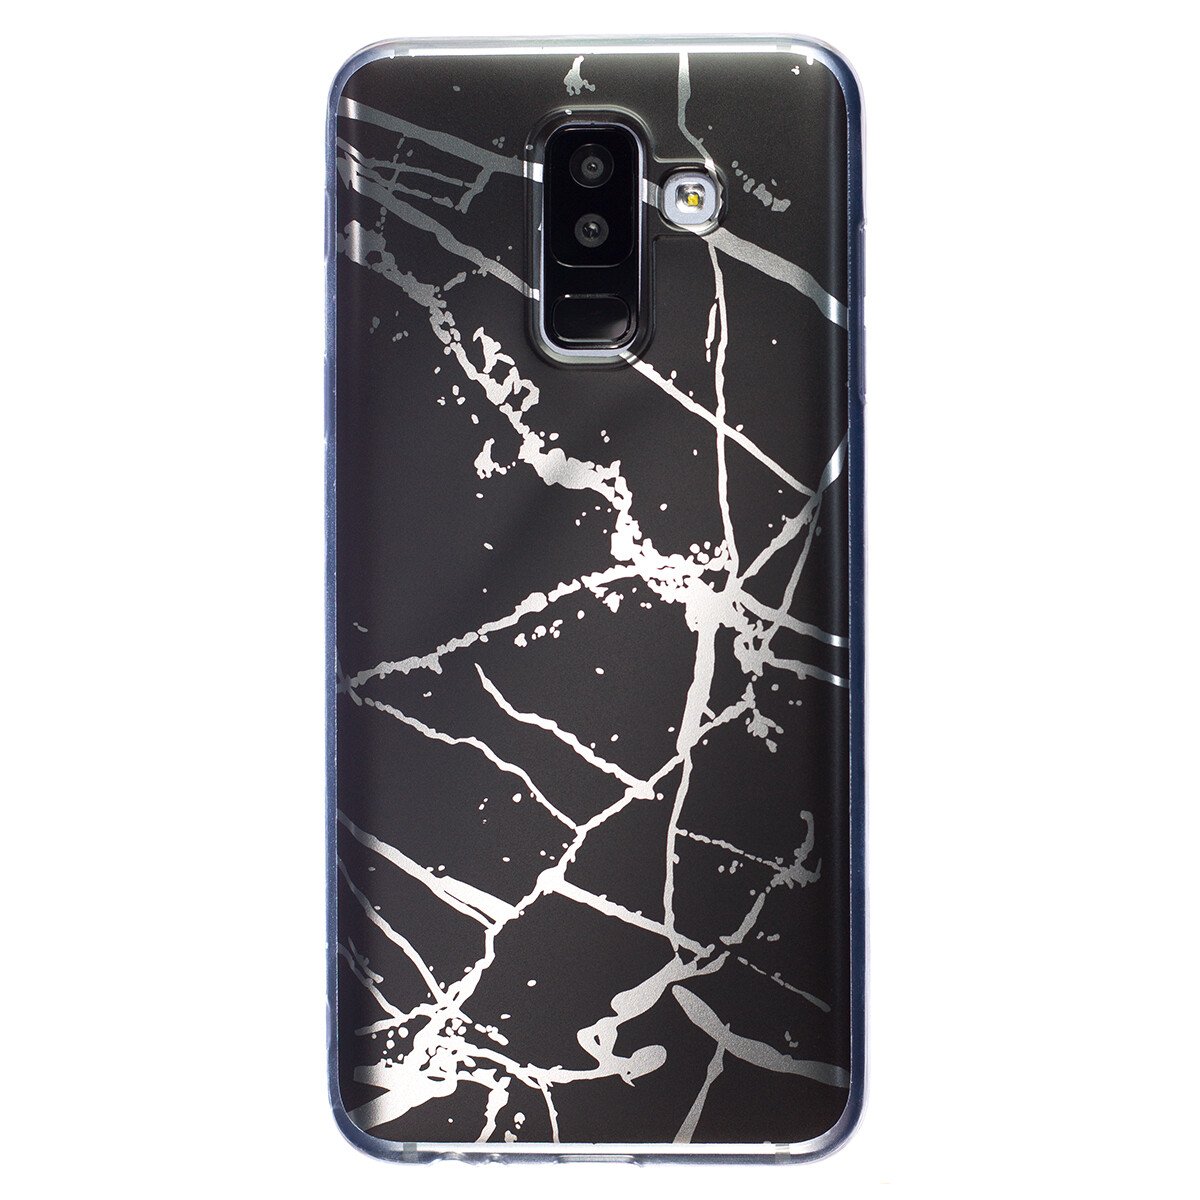 Husa Fashion Samsung Galaxy A6 Plus 2018, Marble Negru thumb